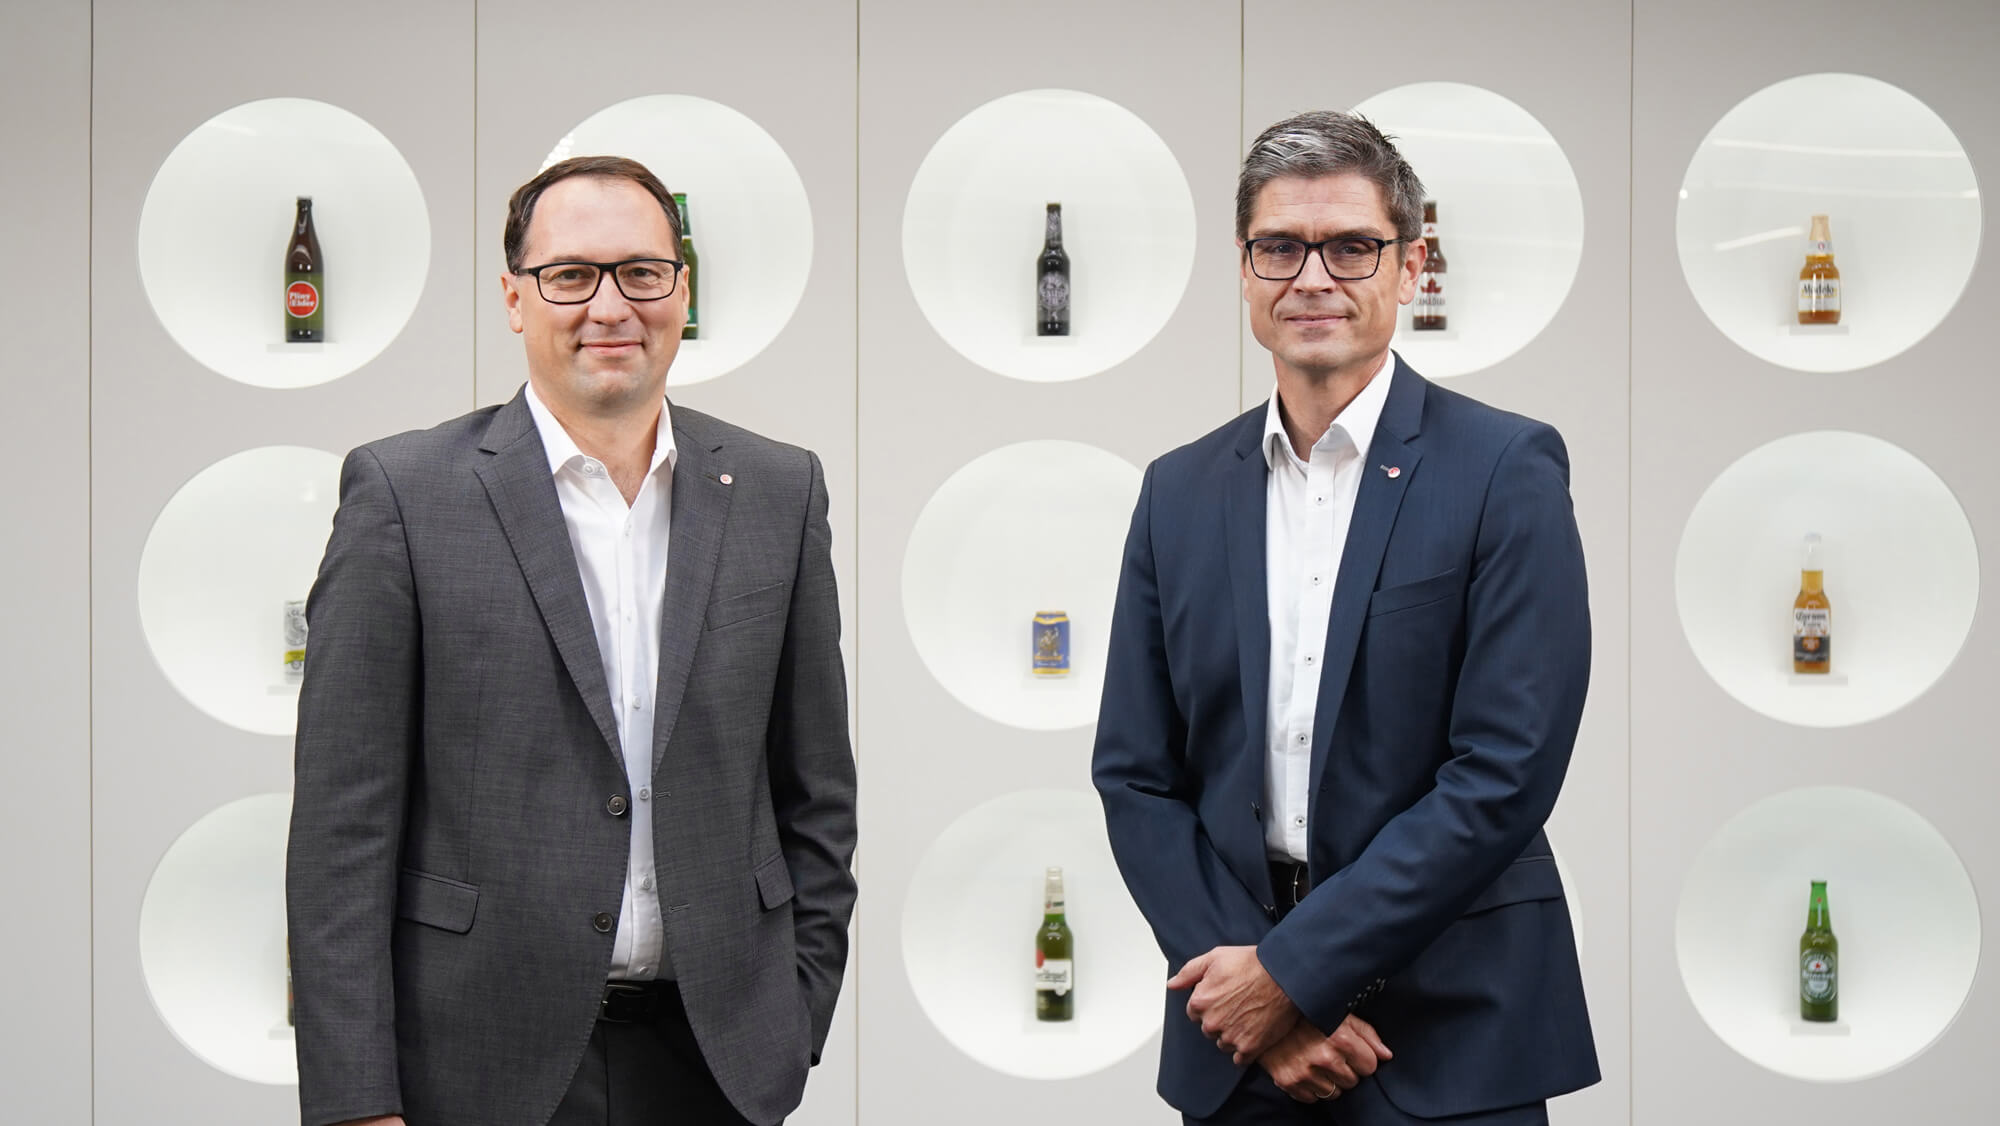 Ziemann Holvrieka appoints new Managing Director Sales and Marketing